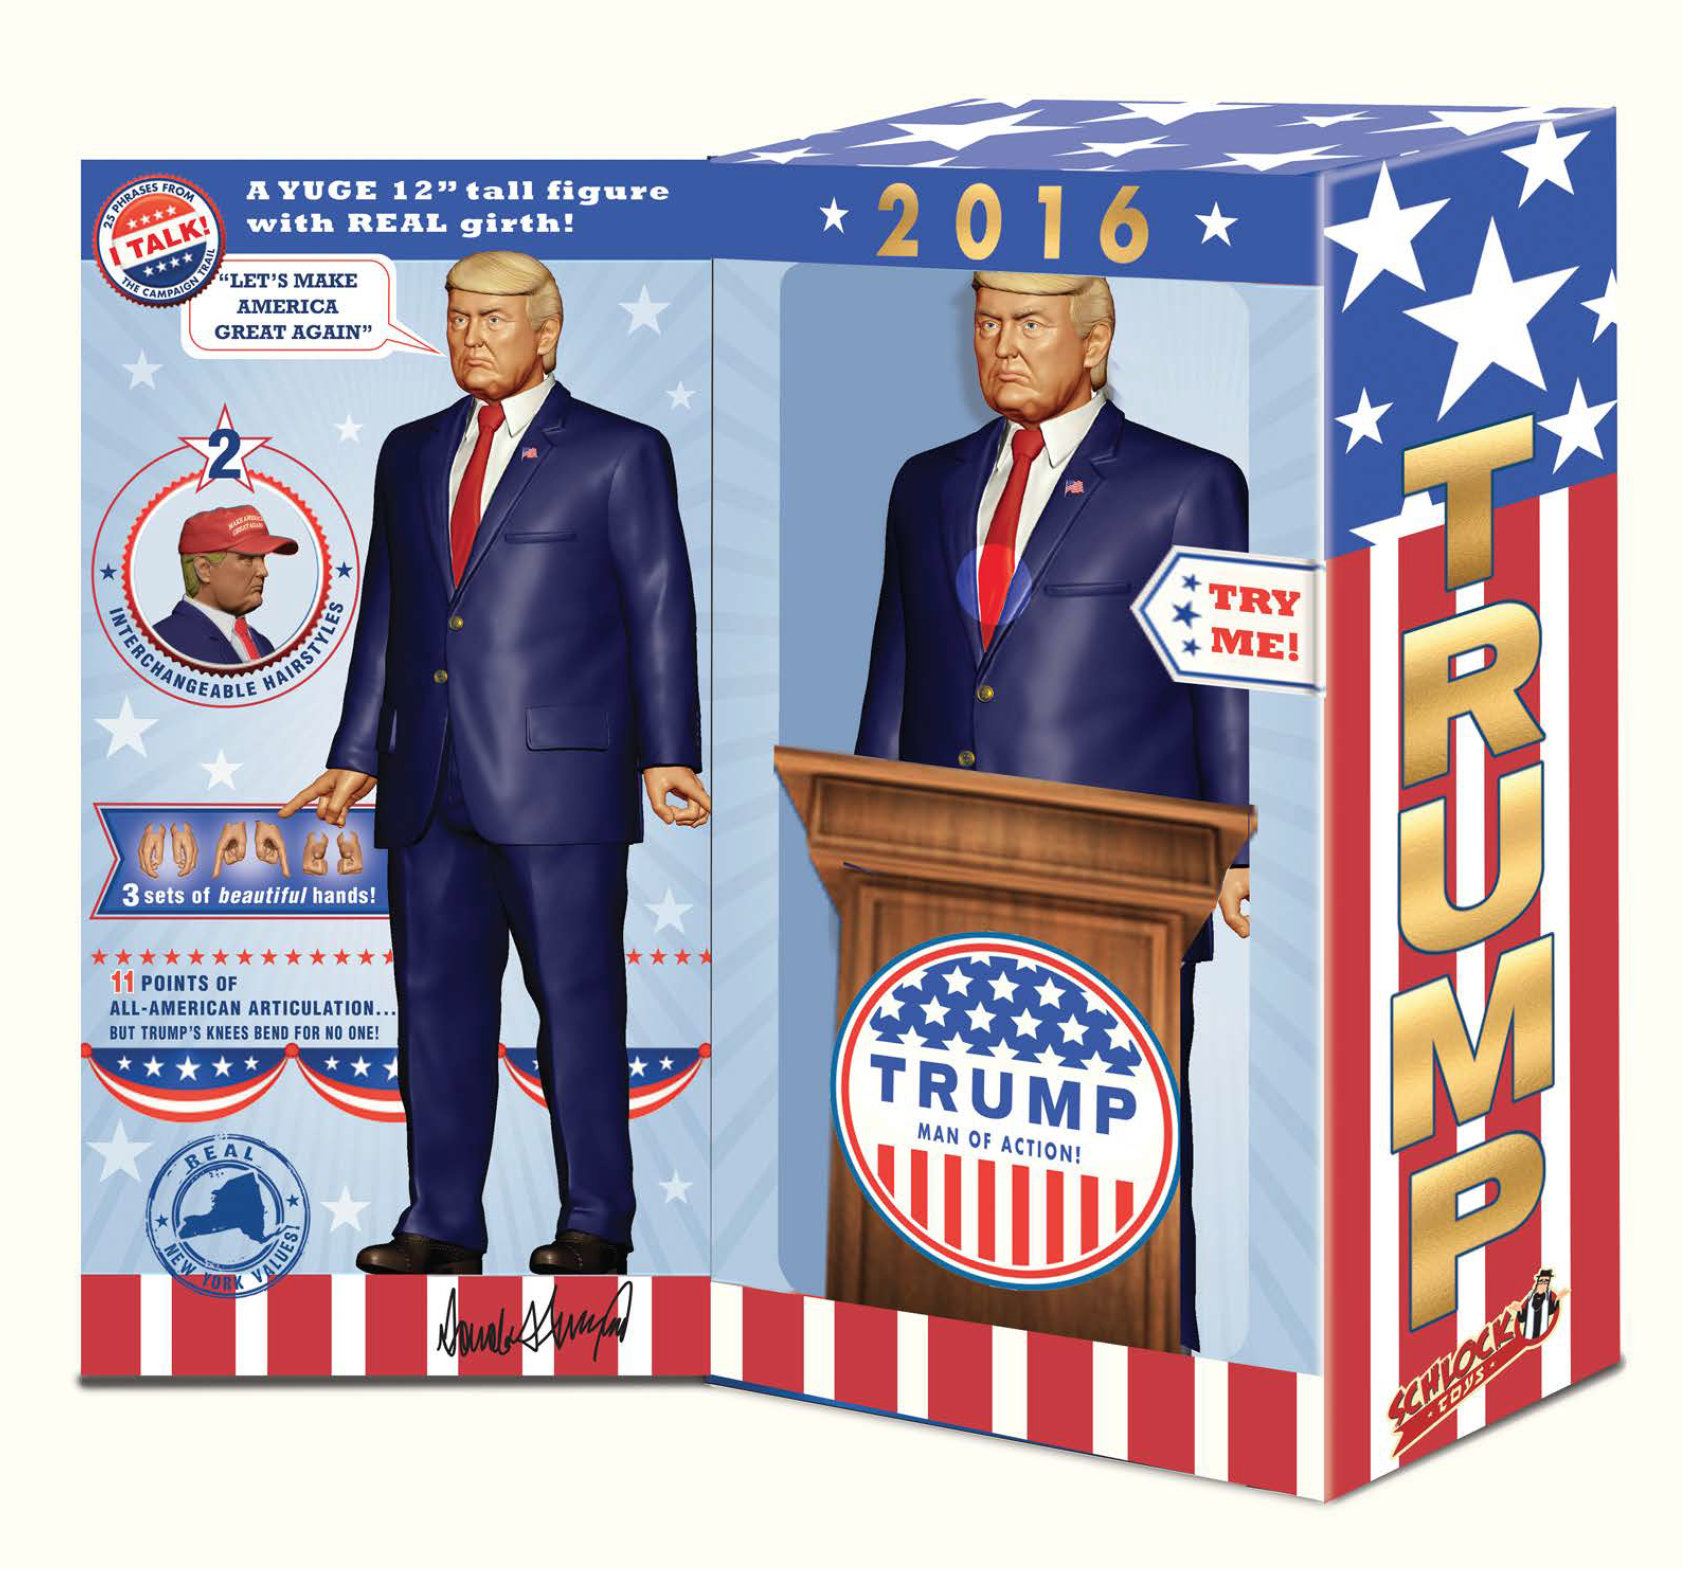 Trump 2016 - Man of Action Figure! Packaging